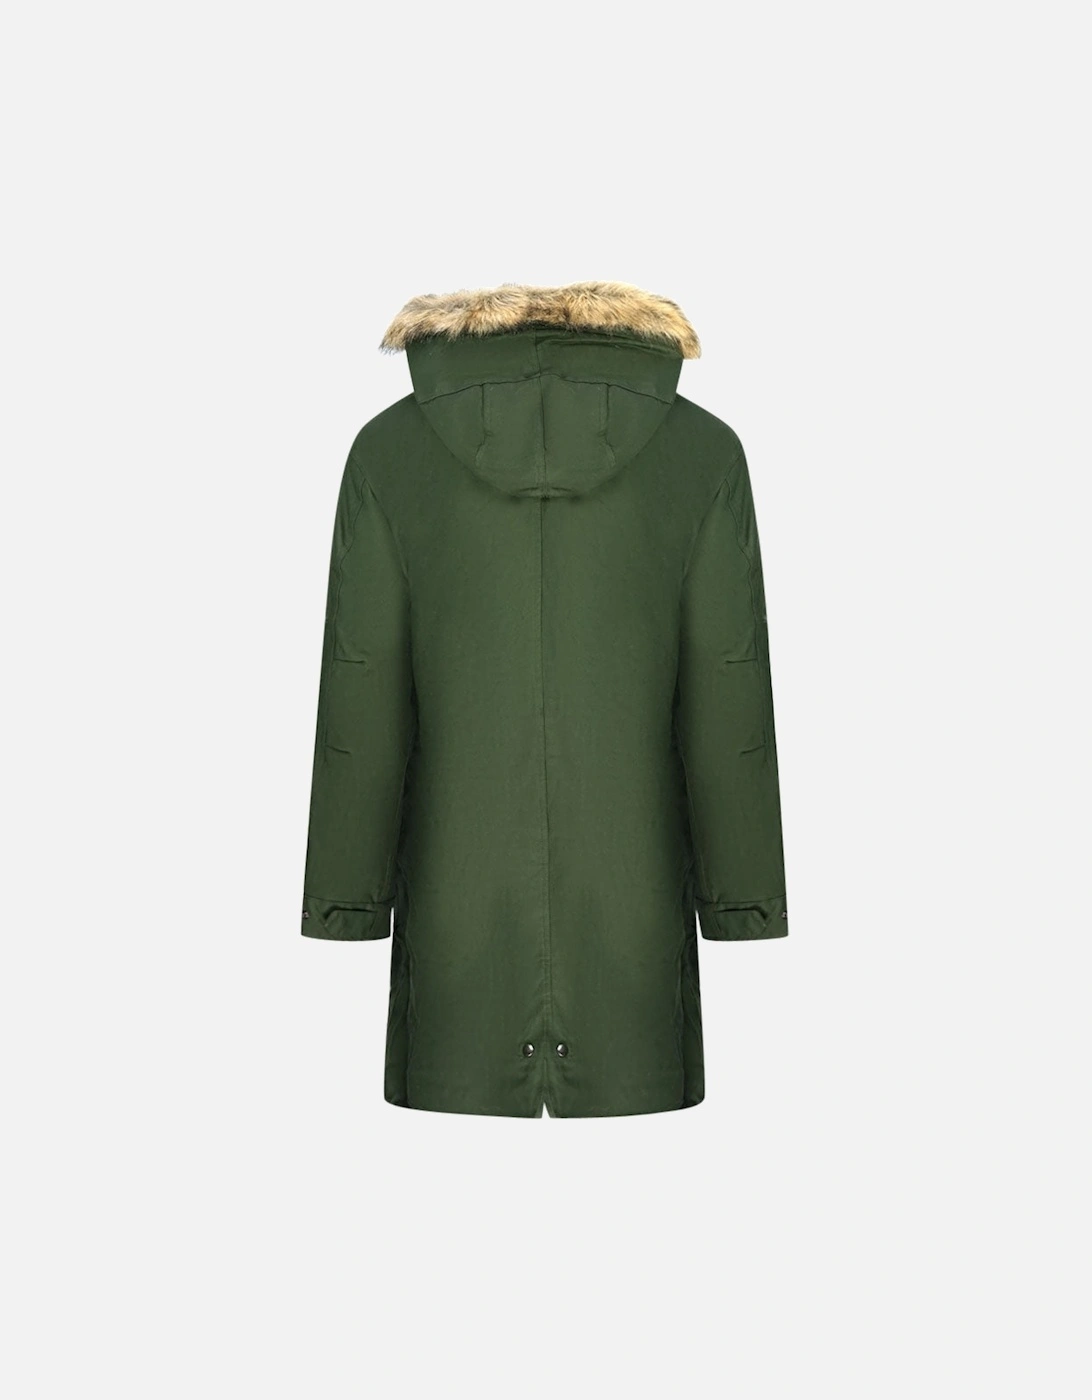 Green Hooded Parka Jacket